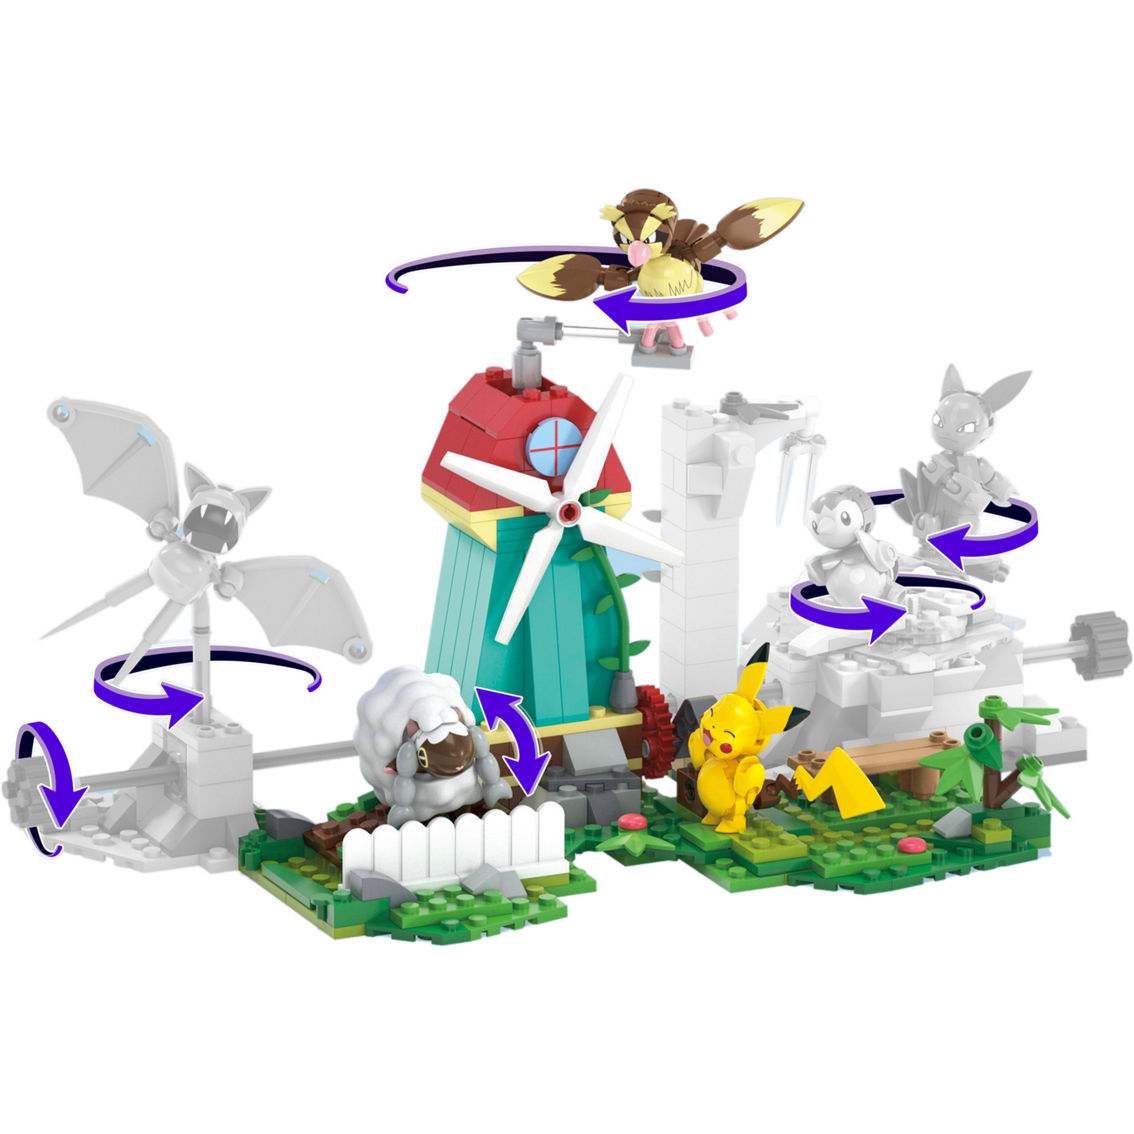 MEGA Pokémon Countryside Windmill